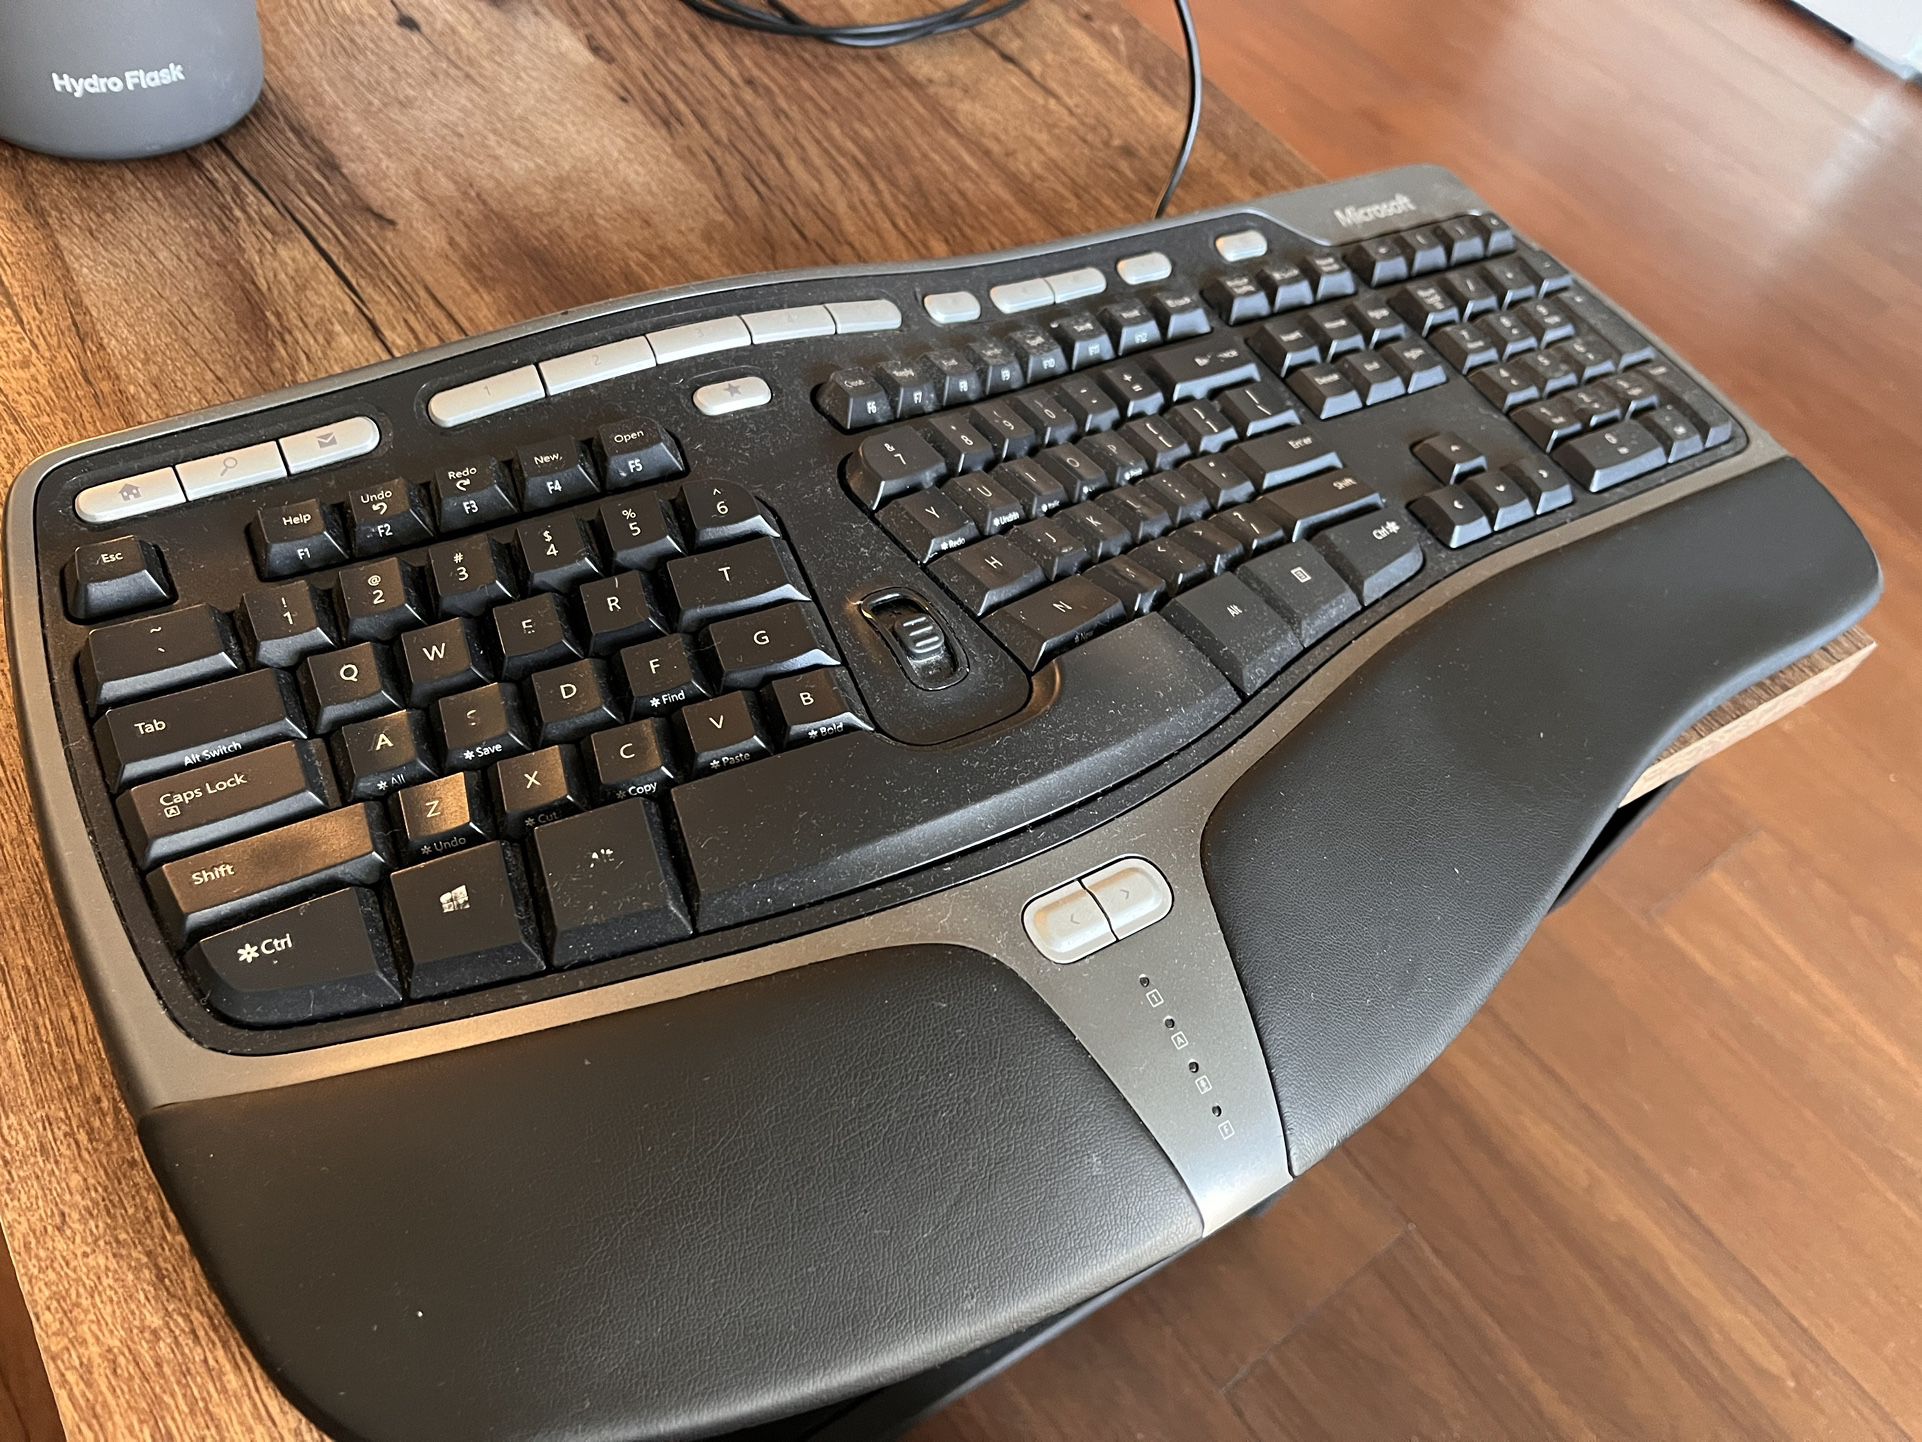 Microsoft Ergonomic 4000 Keyboard